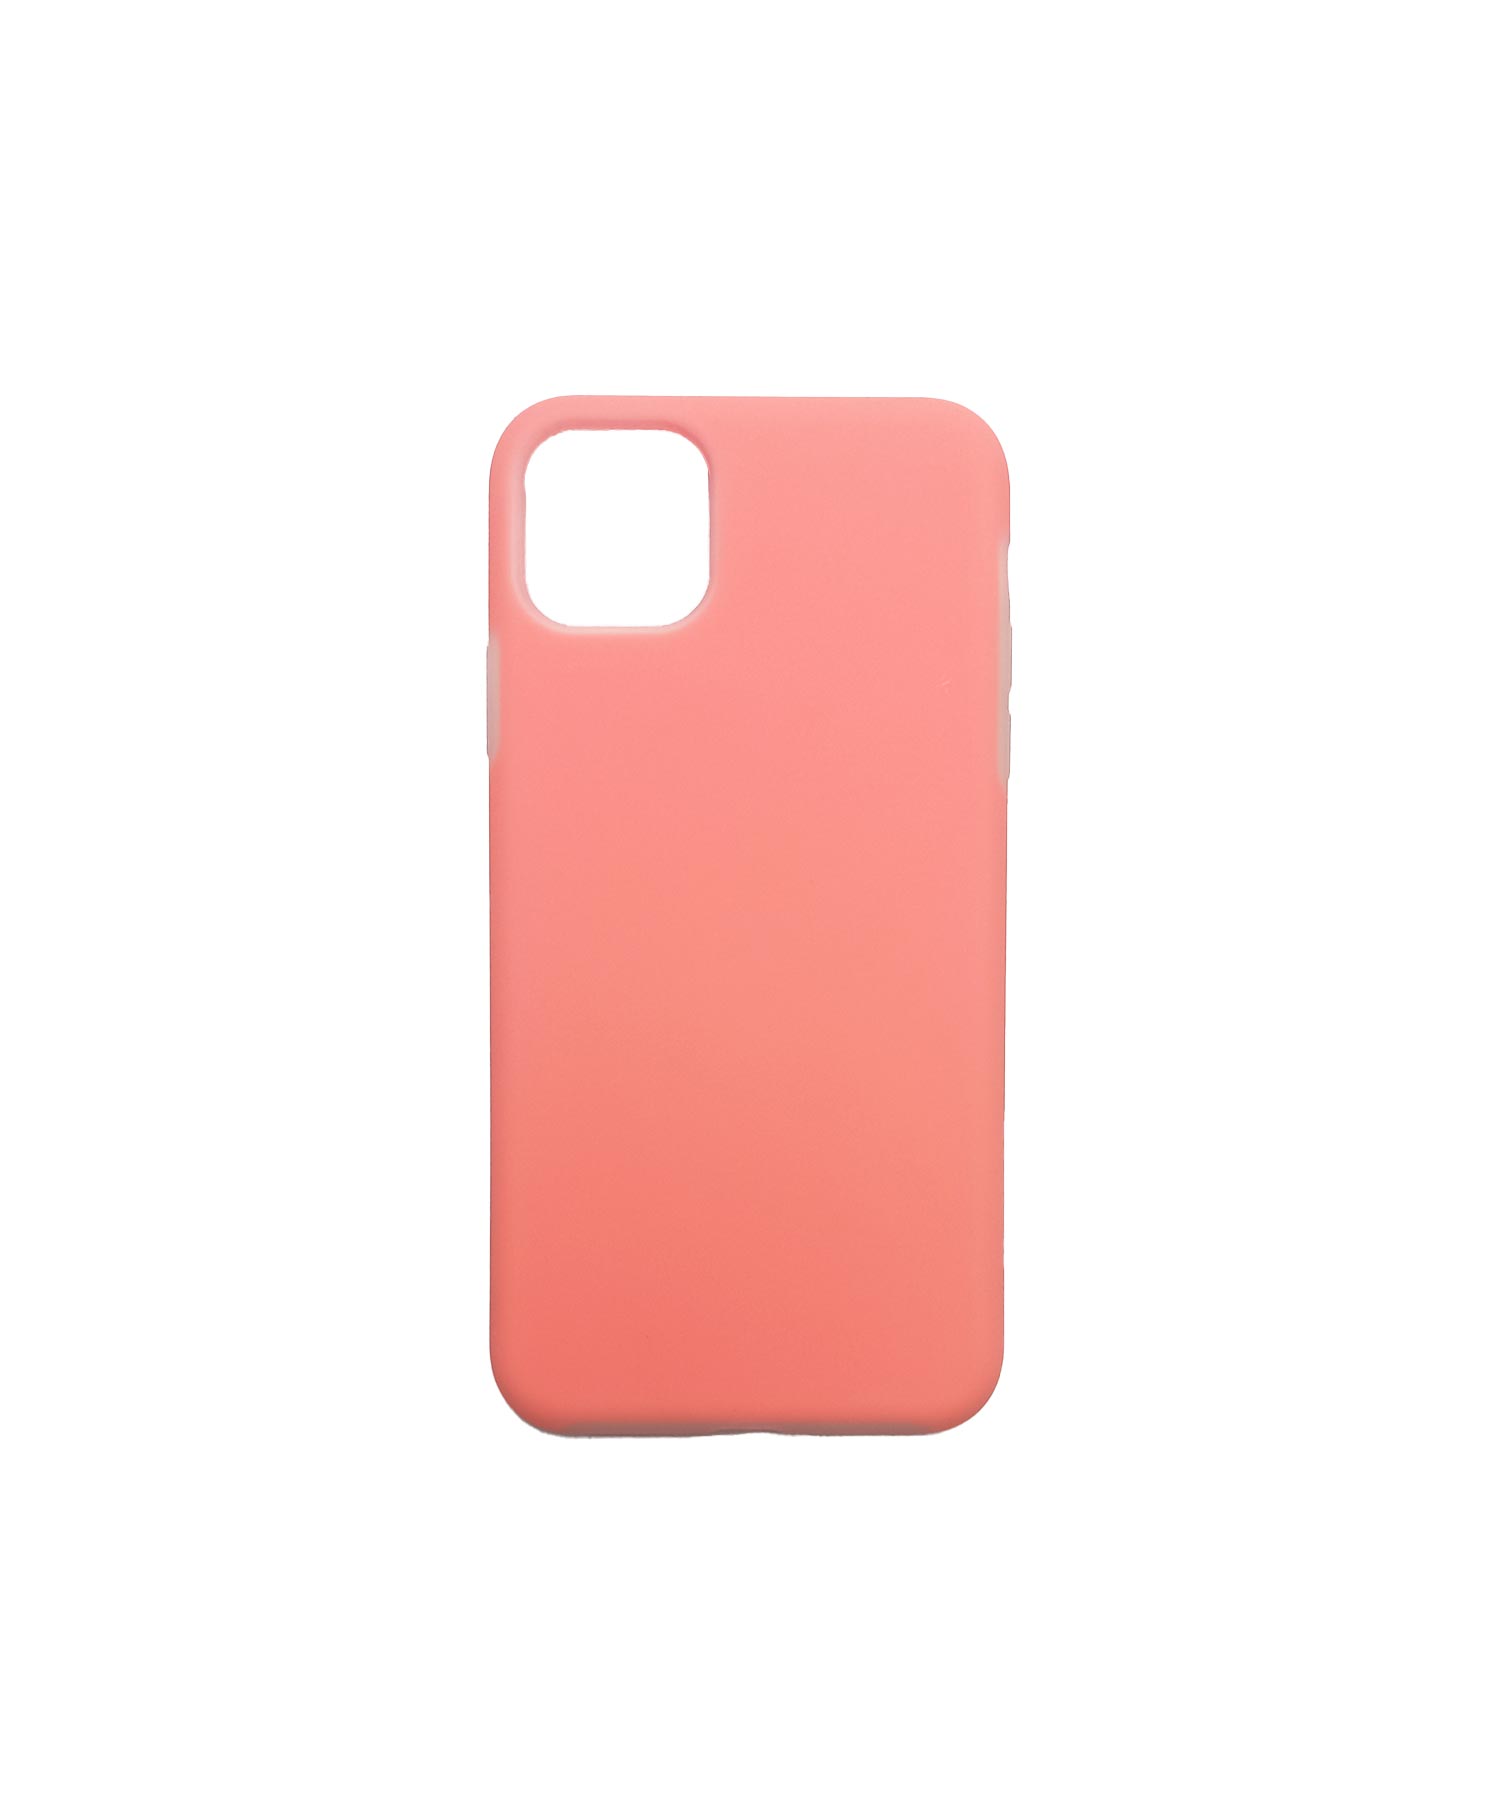 قاب Jelly Case گوشی موبایل آیفون Iphone 11 Pro Max